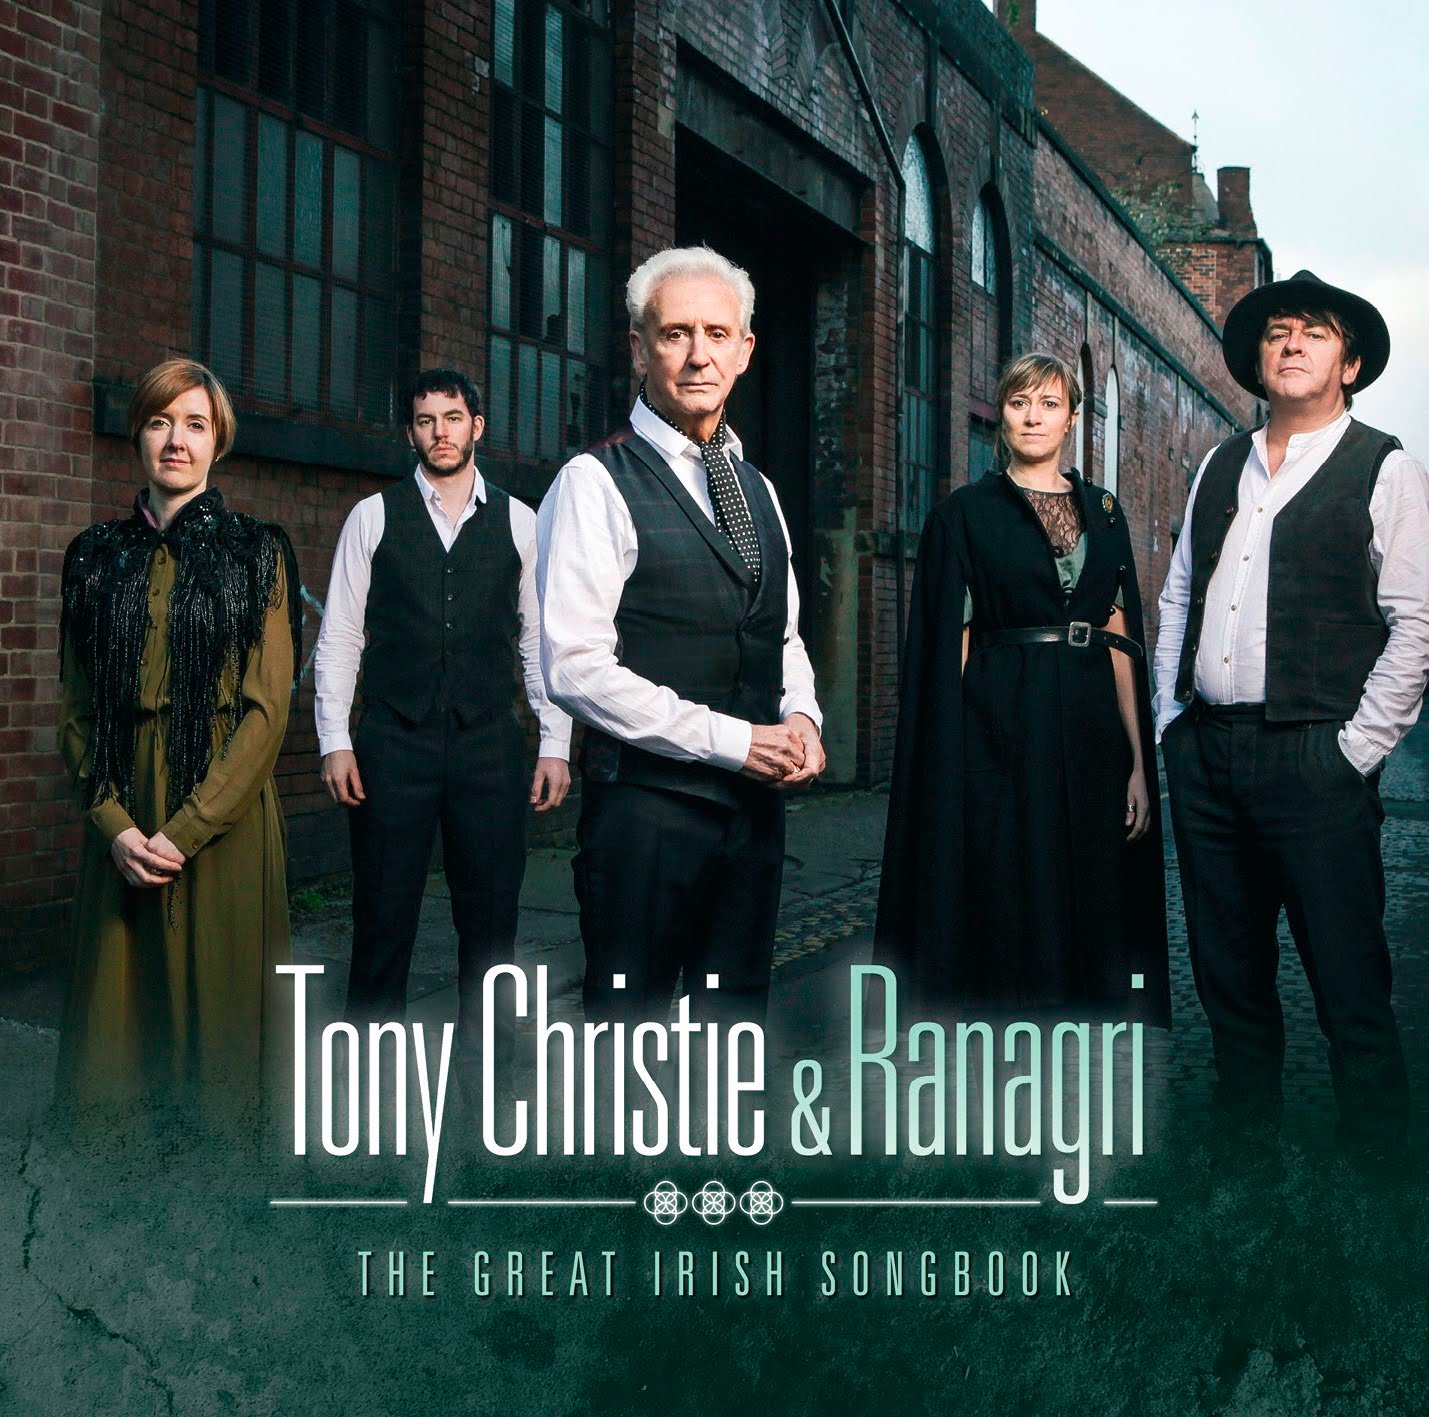 Tony Christie & Ranagri – The Great Irish Songbook (2015) SACD ISO + Hi-Res FLAC